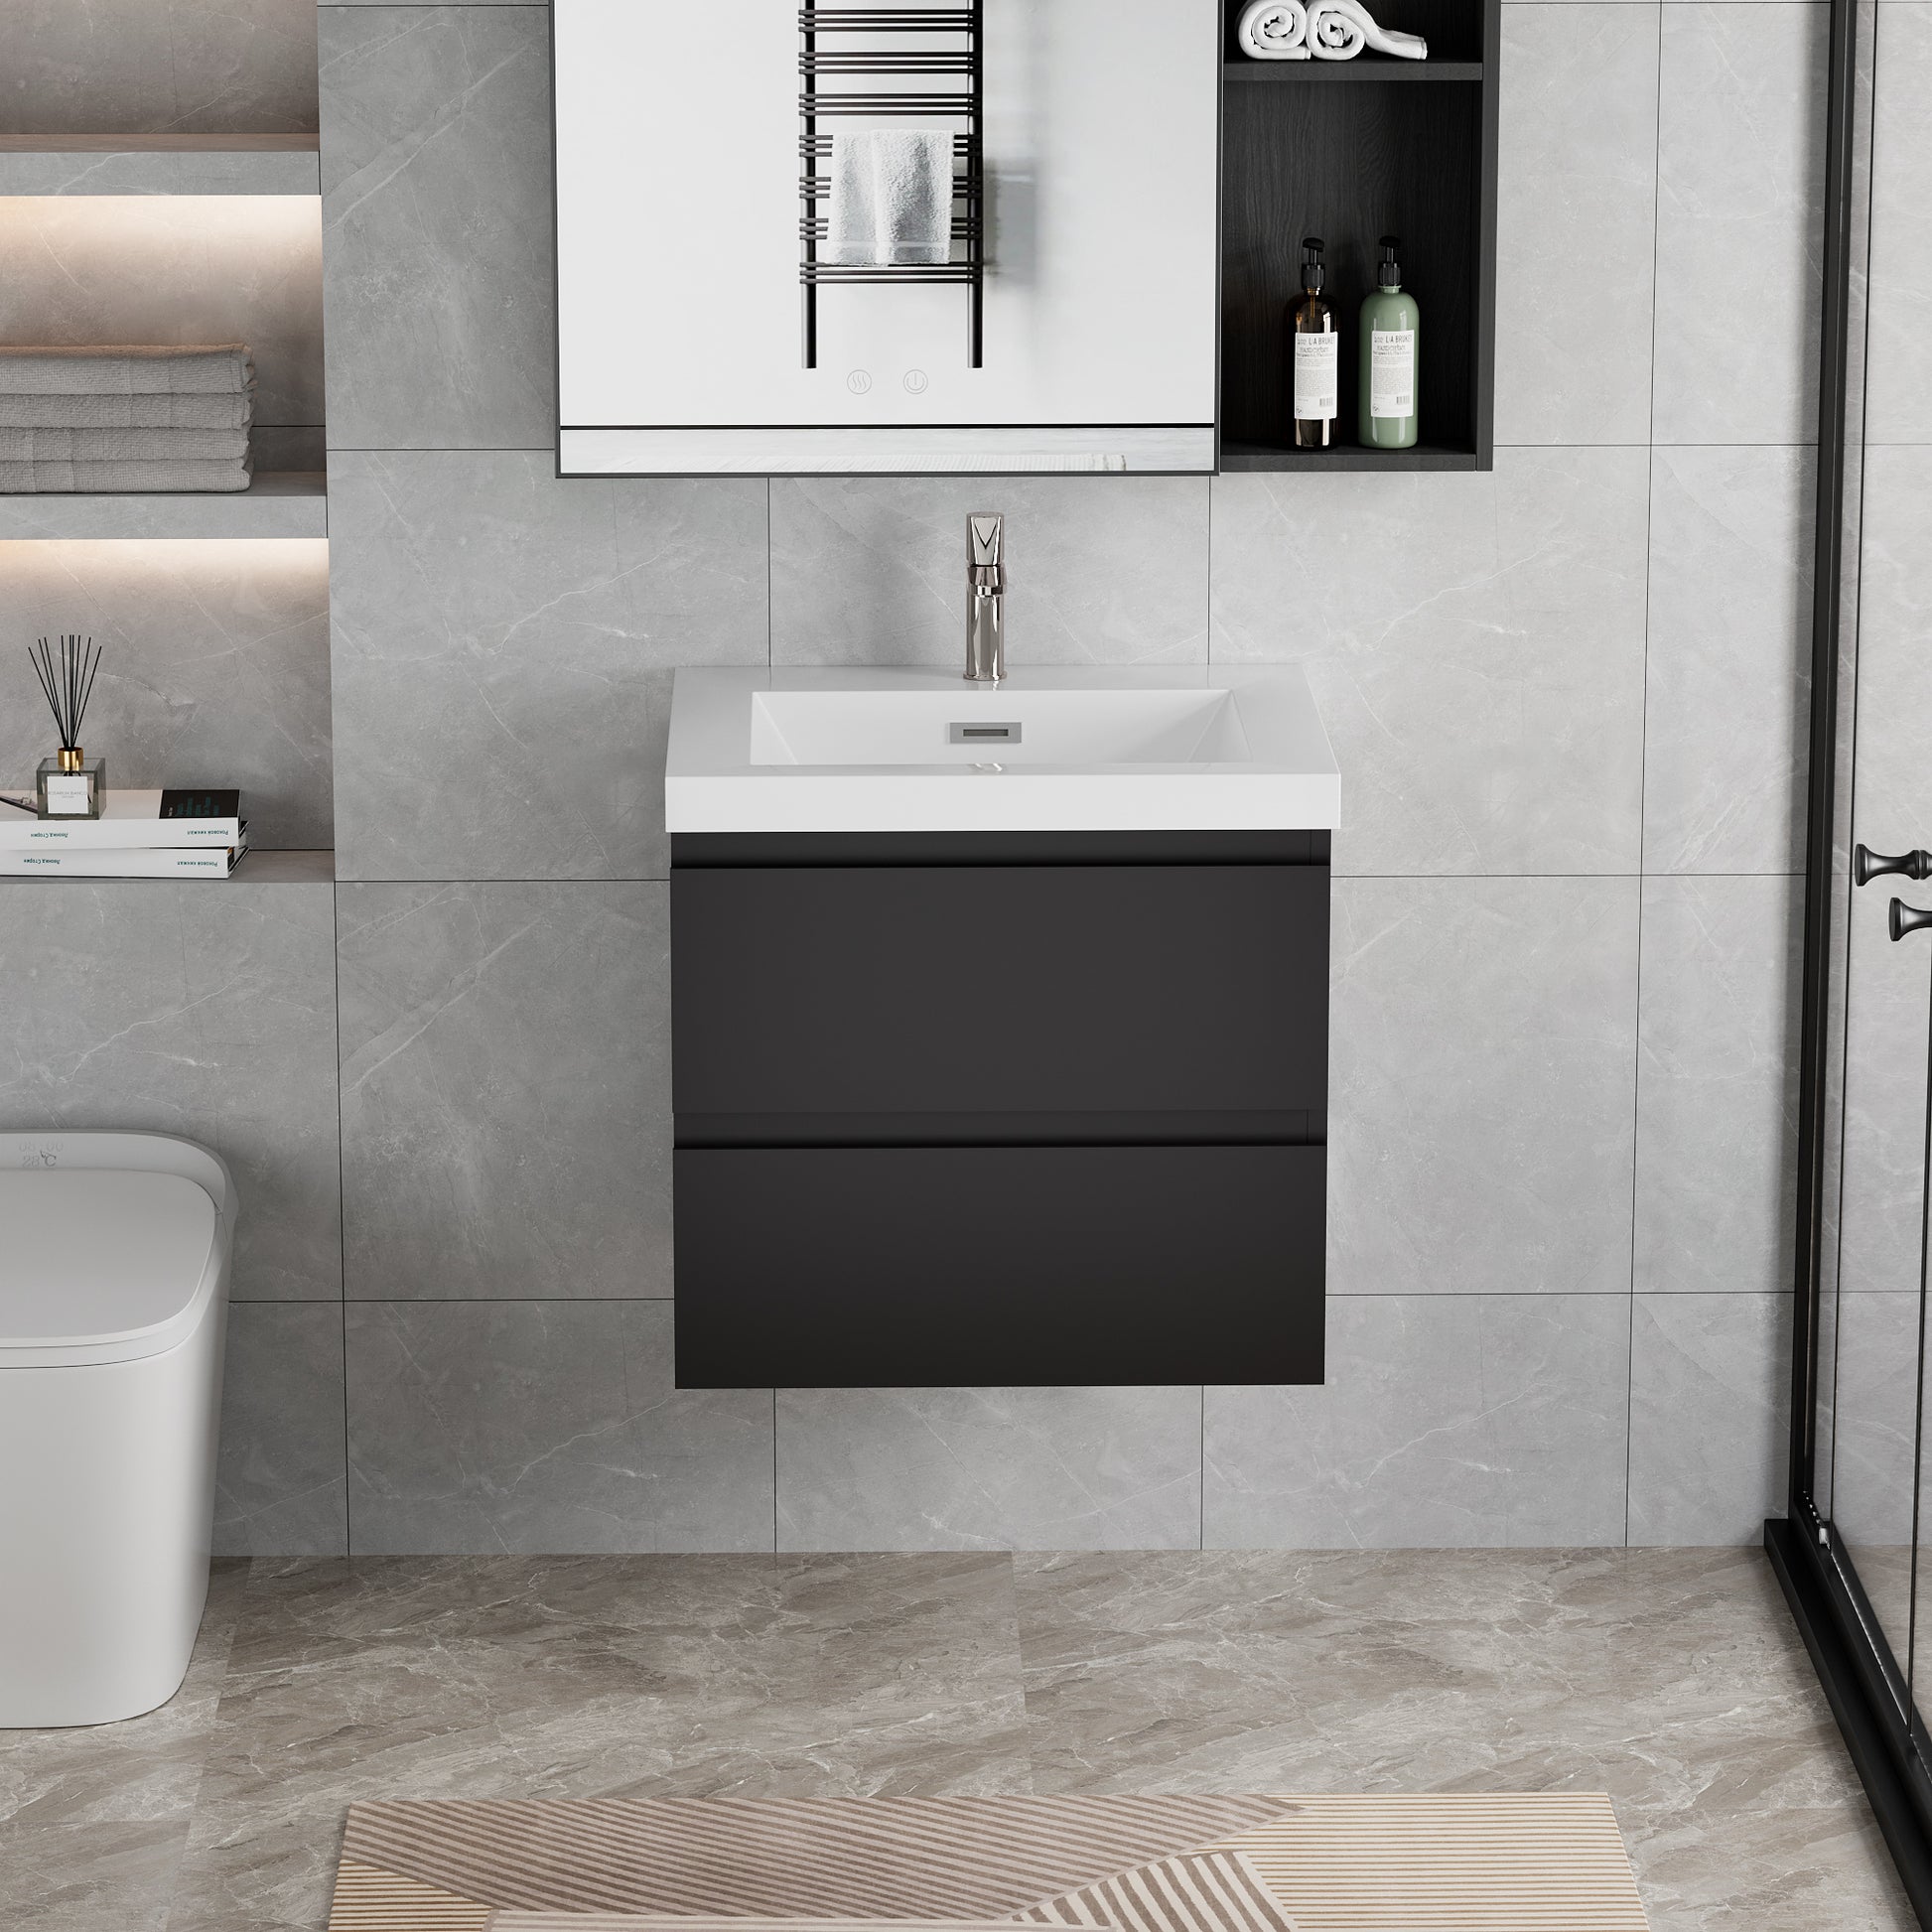 24" Floating Bathroom Vanity with Sink, Modern Wall 2-black-wall mounted-mdf